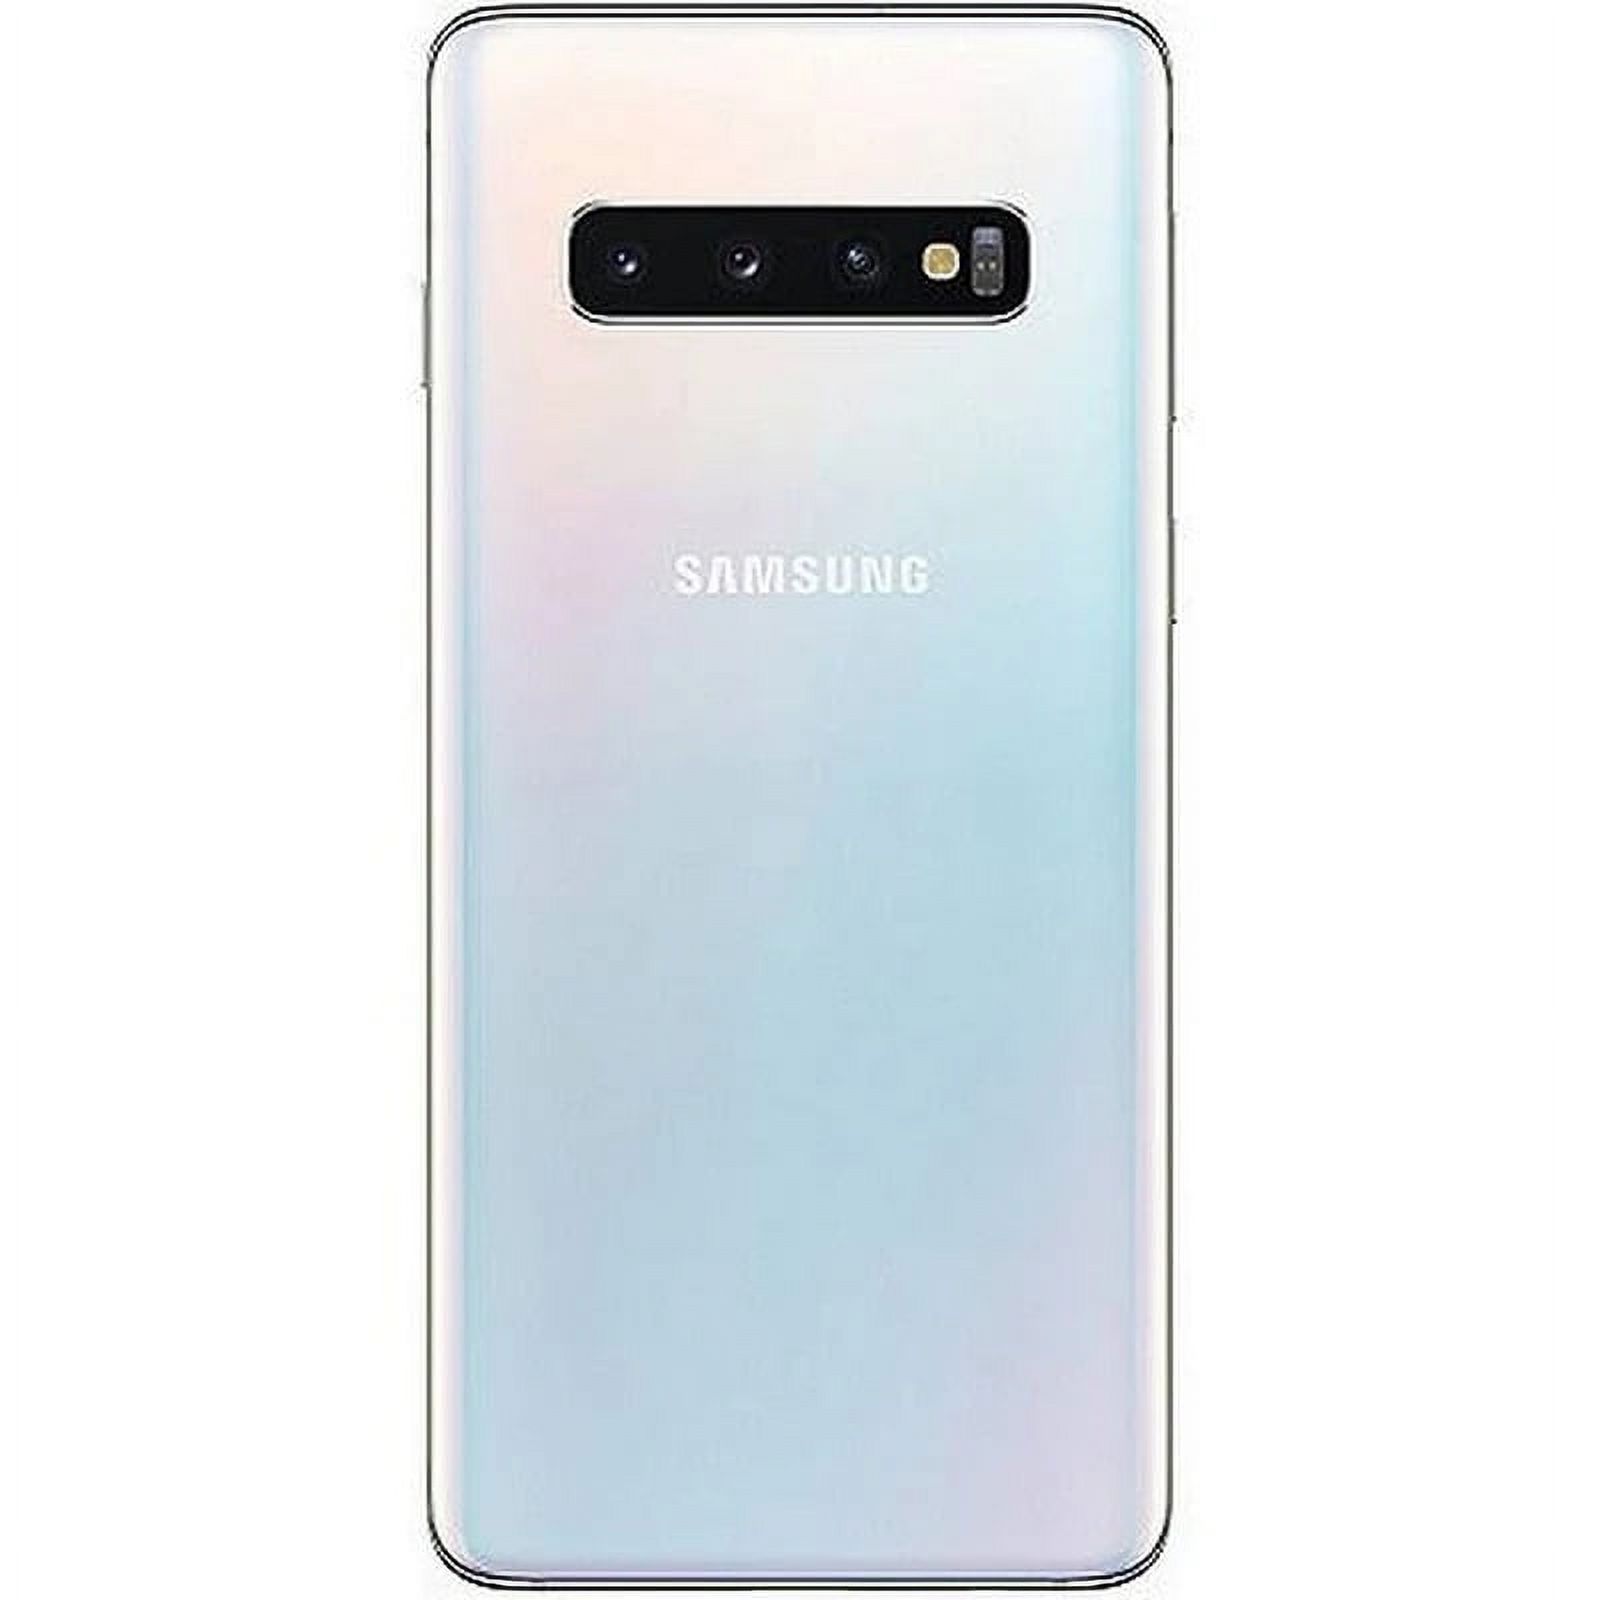 Samsung Galaxy S10 G973U 128GB GSM/CDMA Unlocked Android Phone - Prism White (Used) - image 3 of 4